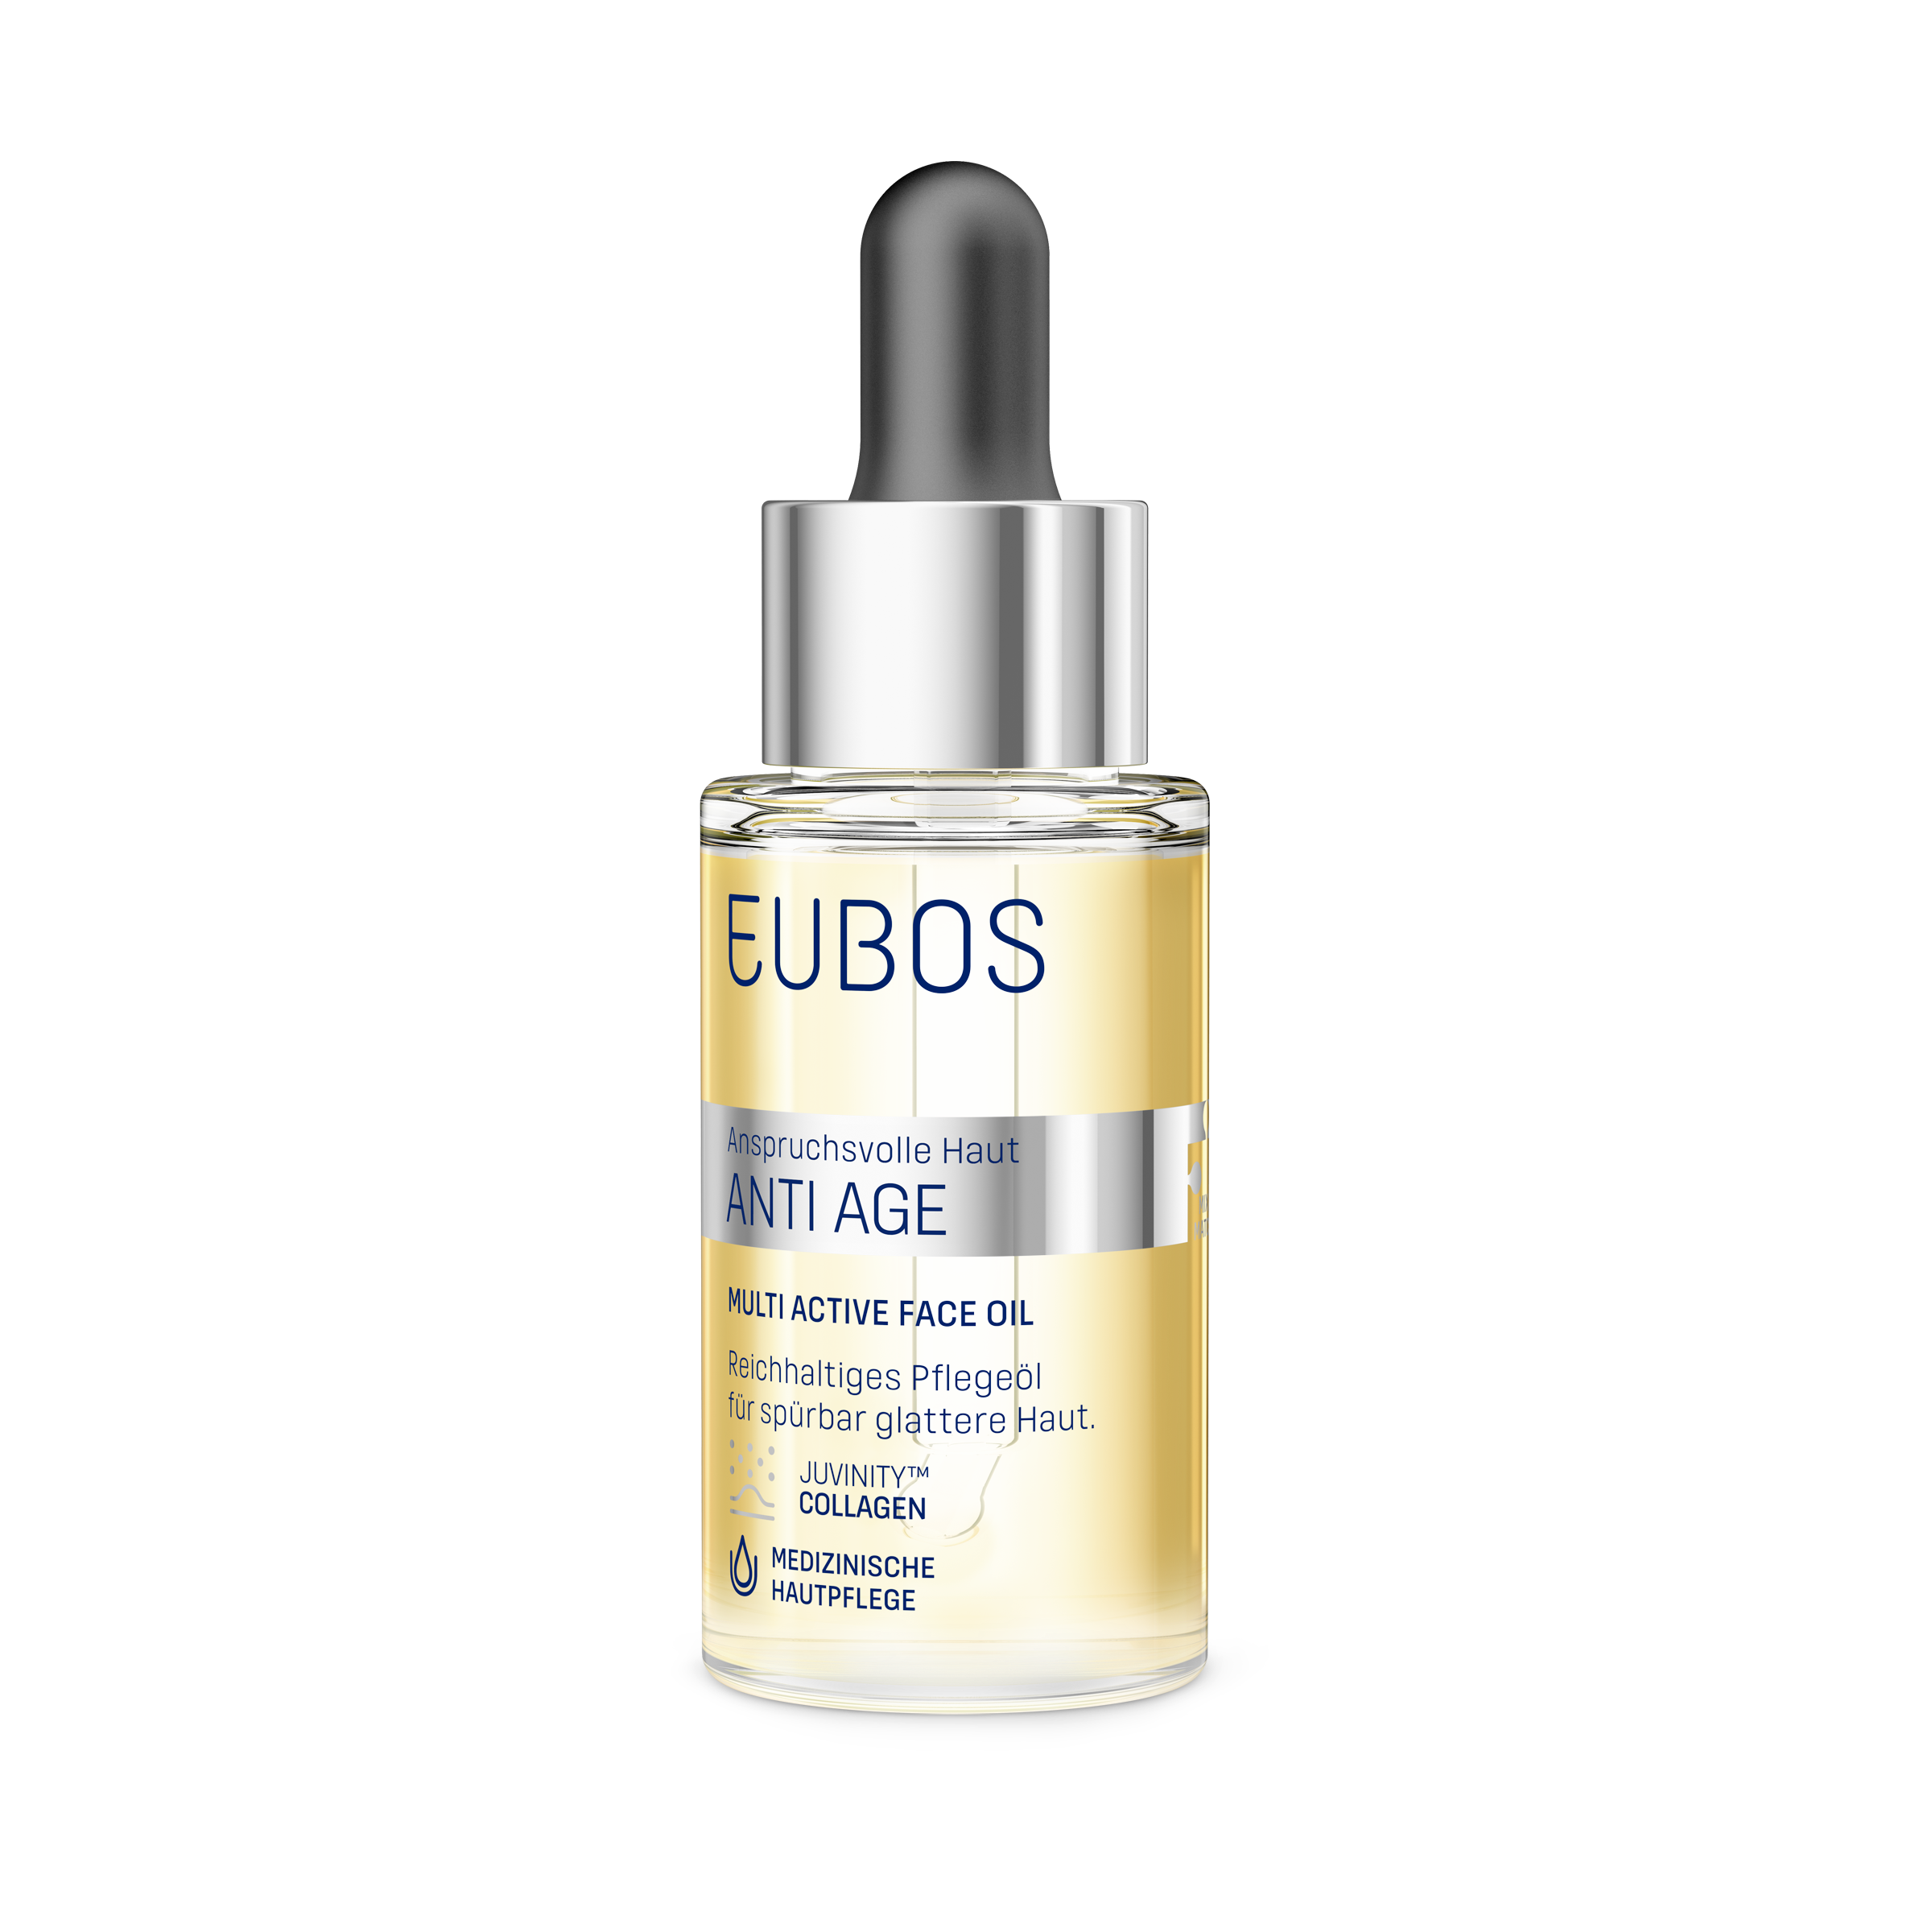 Eubos Anti Age Multi Active Face Oil